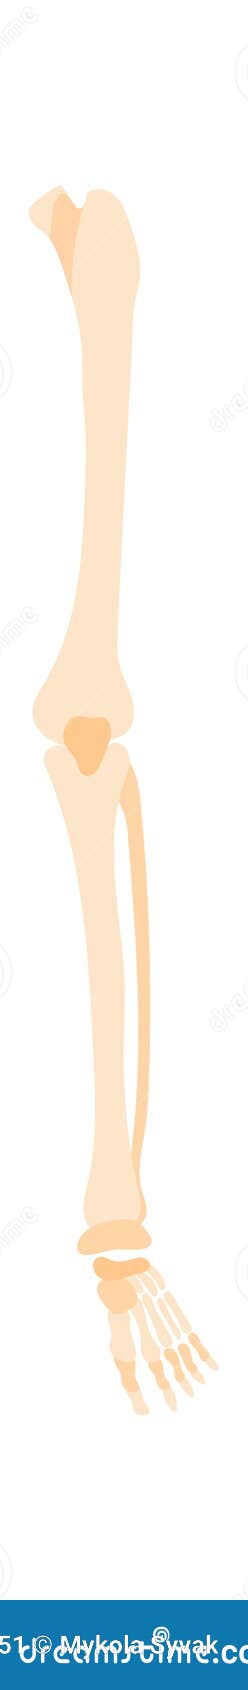 Leg Bones Flat Icon Human Anatomy Stock Vector Illustration Of